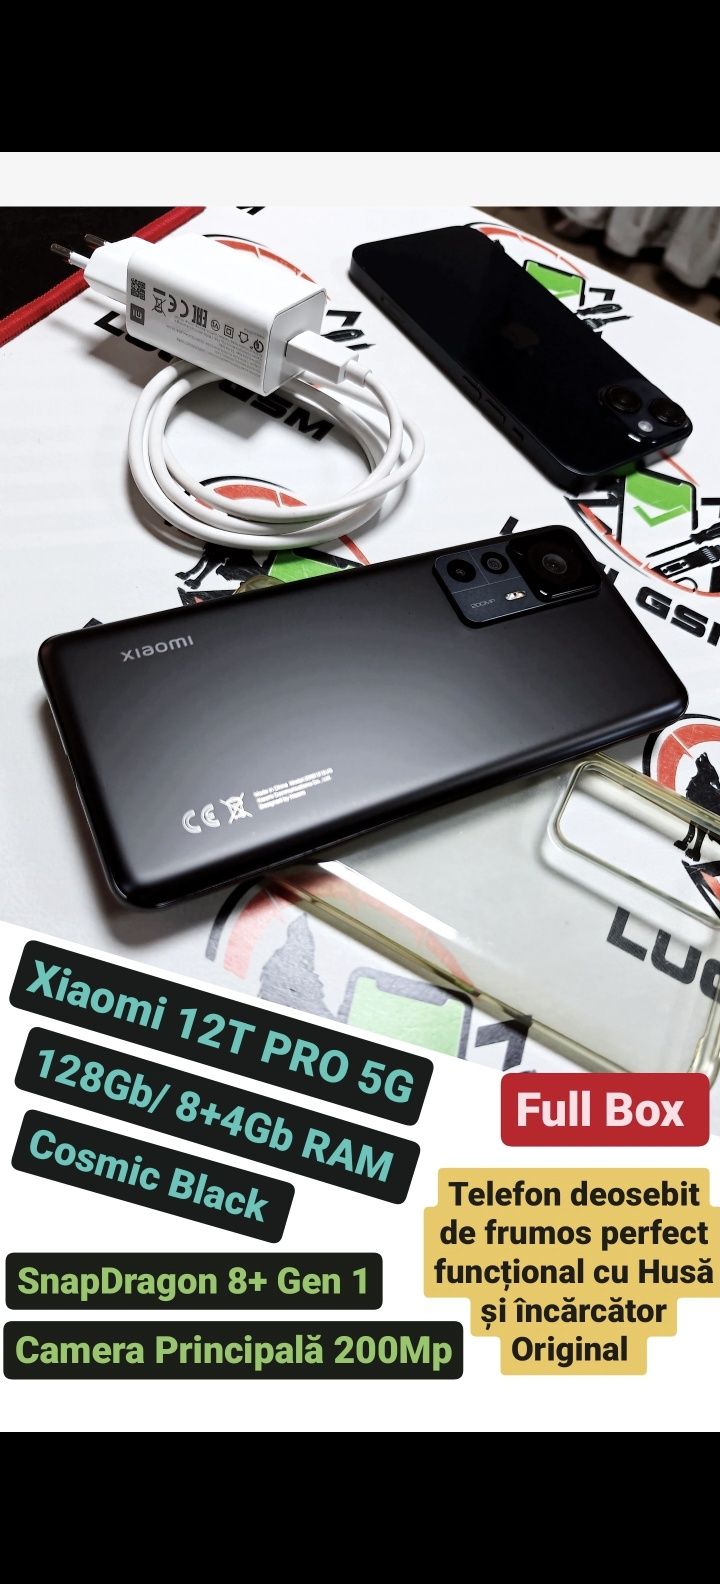 Xiaomi MI 12T PRO 5G (Cosmic Back) 200Mp Camera Full Box Ofertă Preț